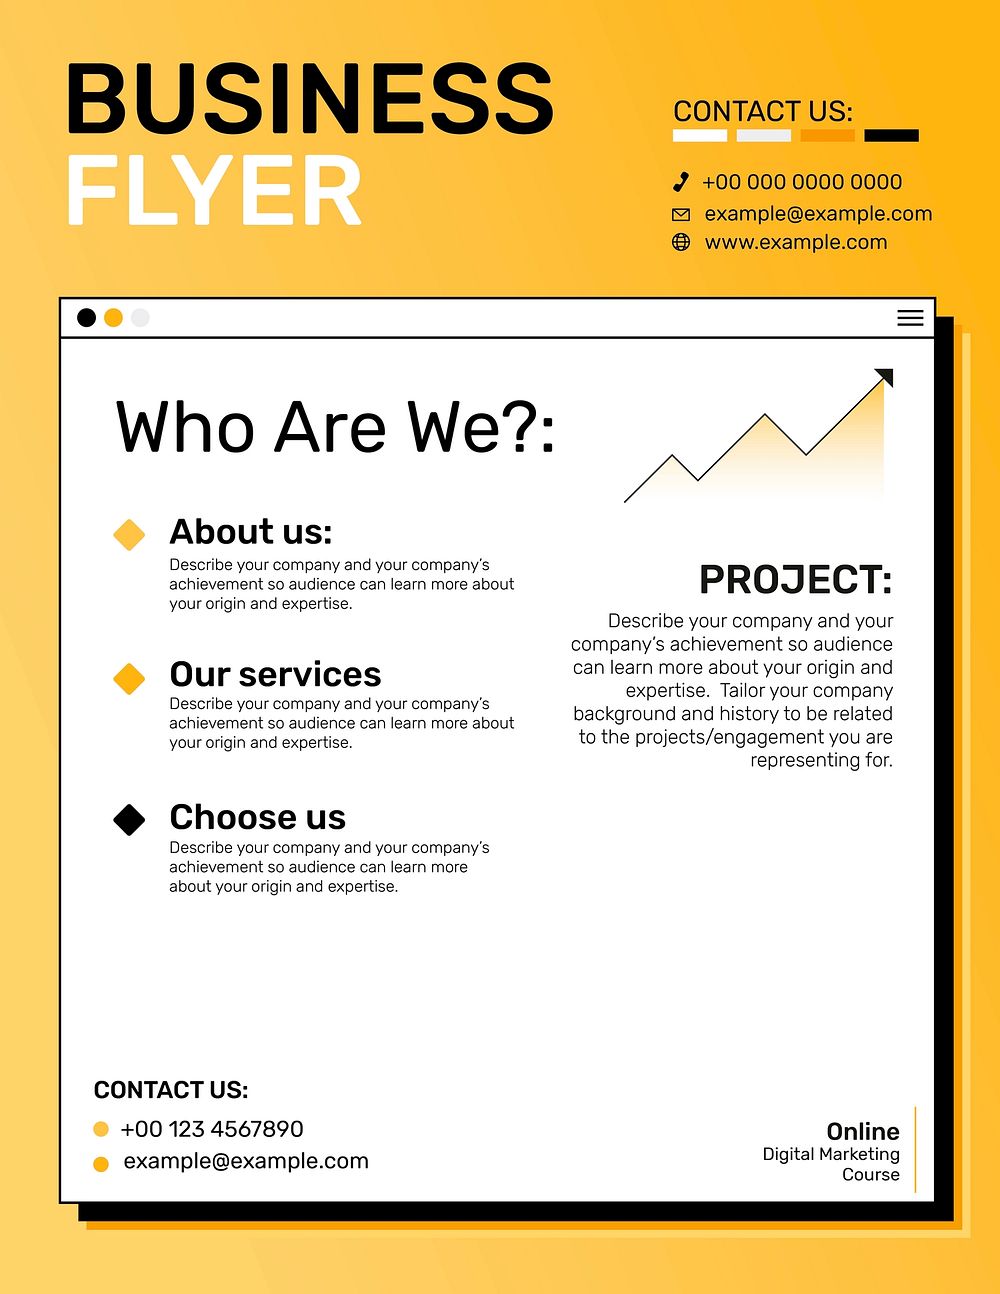 Editable business flyer template vector in yellow pixelated 8 bit design